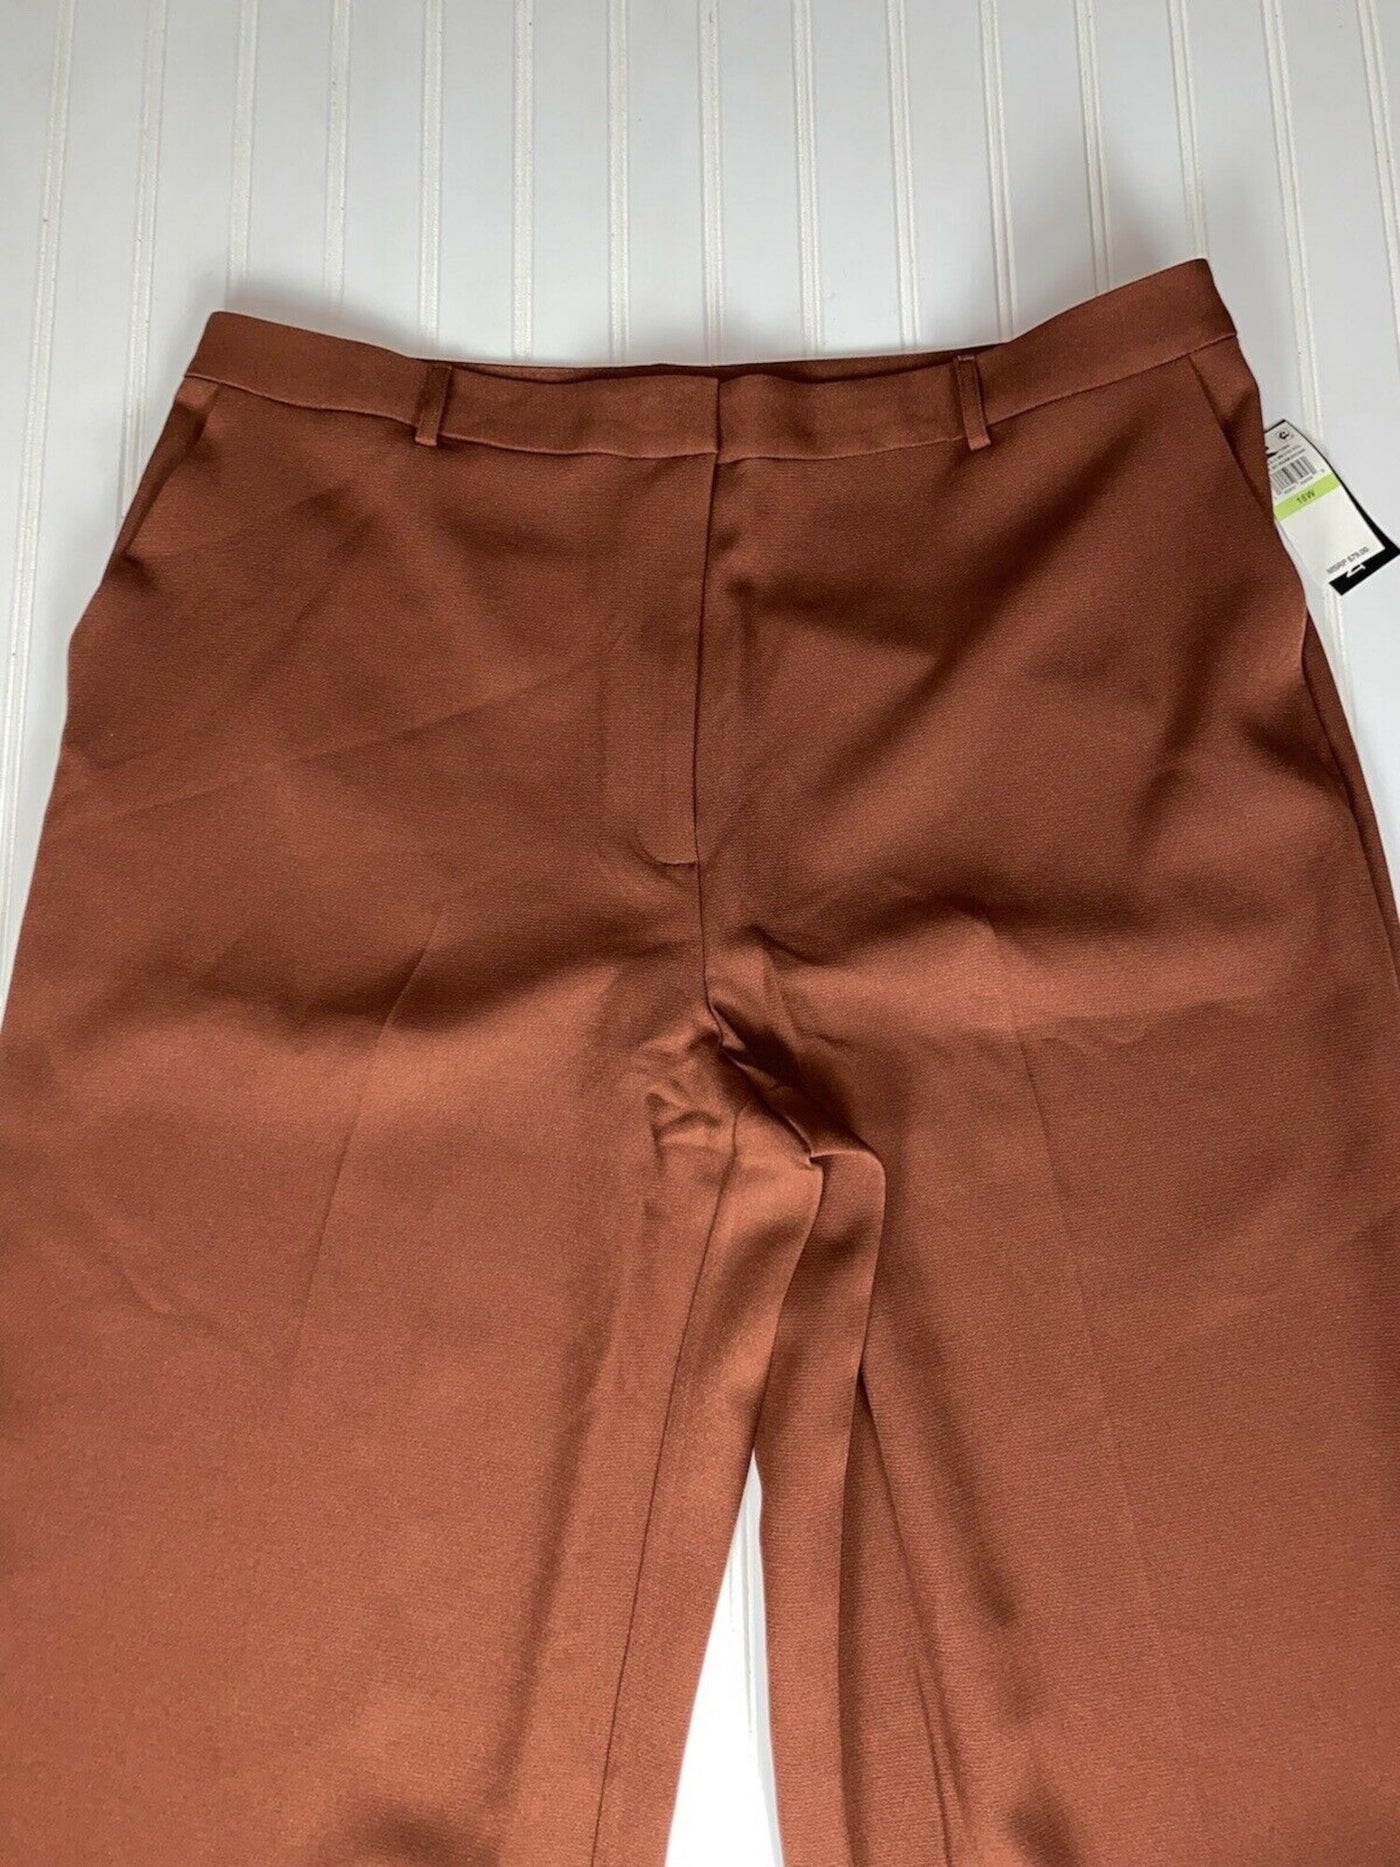 DANIELLE BERNSTEIN Womens Brown Pocketed Zippered Wear To Work Straight leg Pants 6